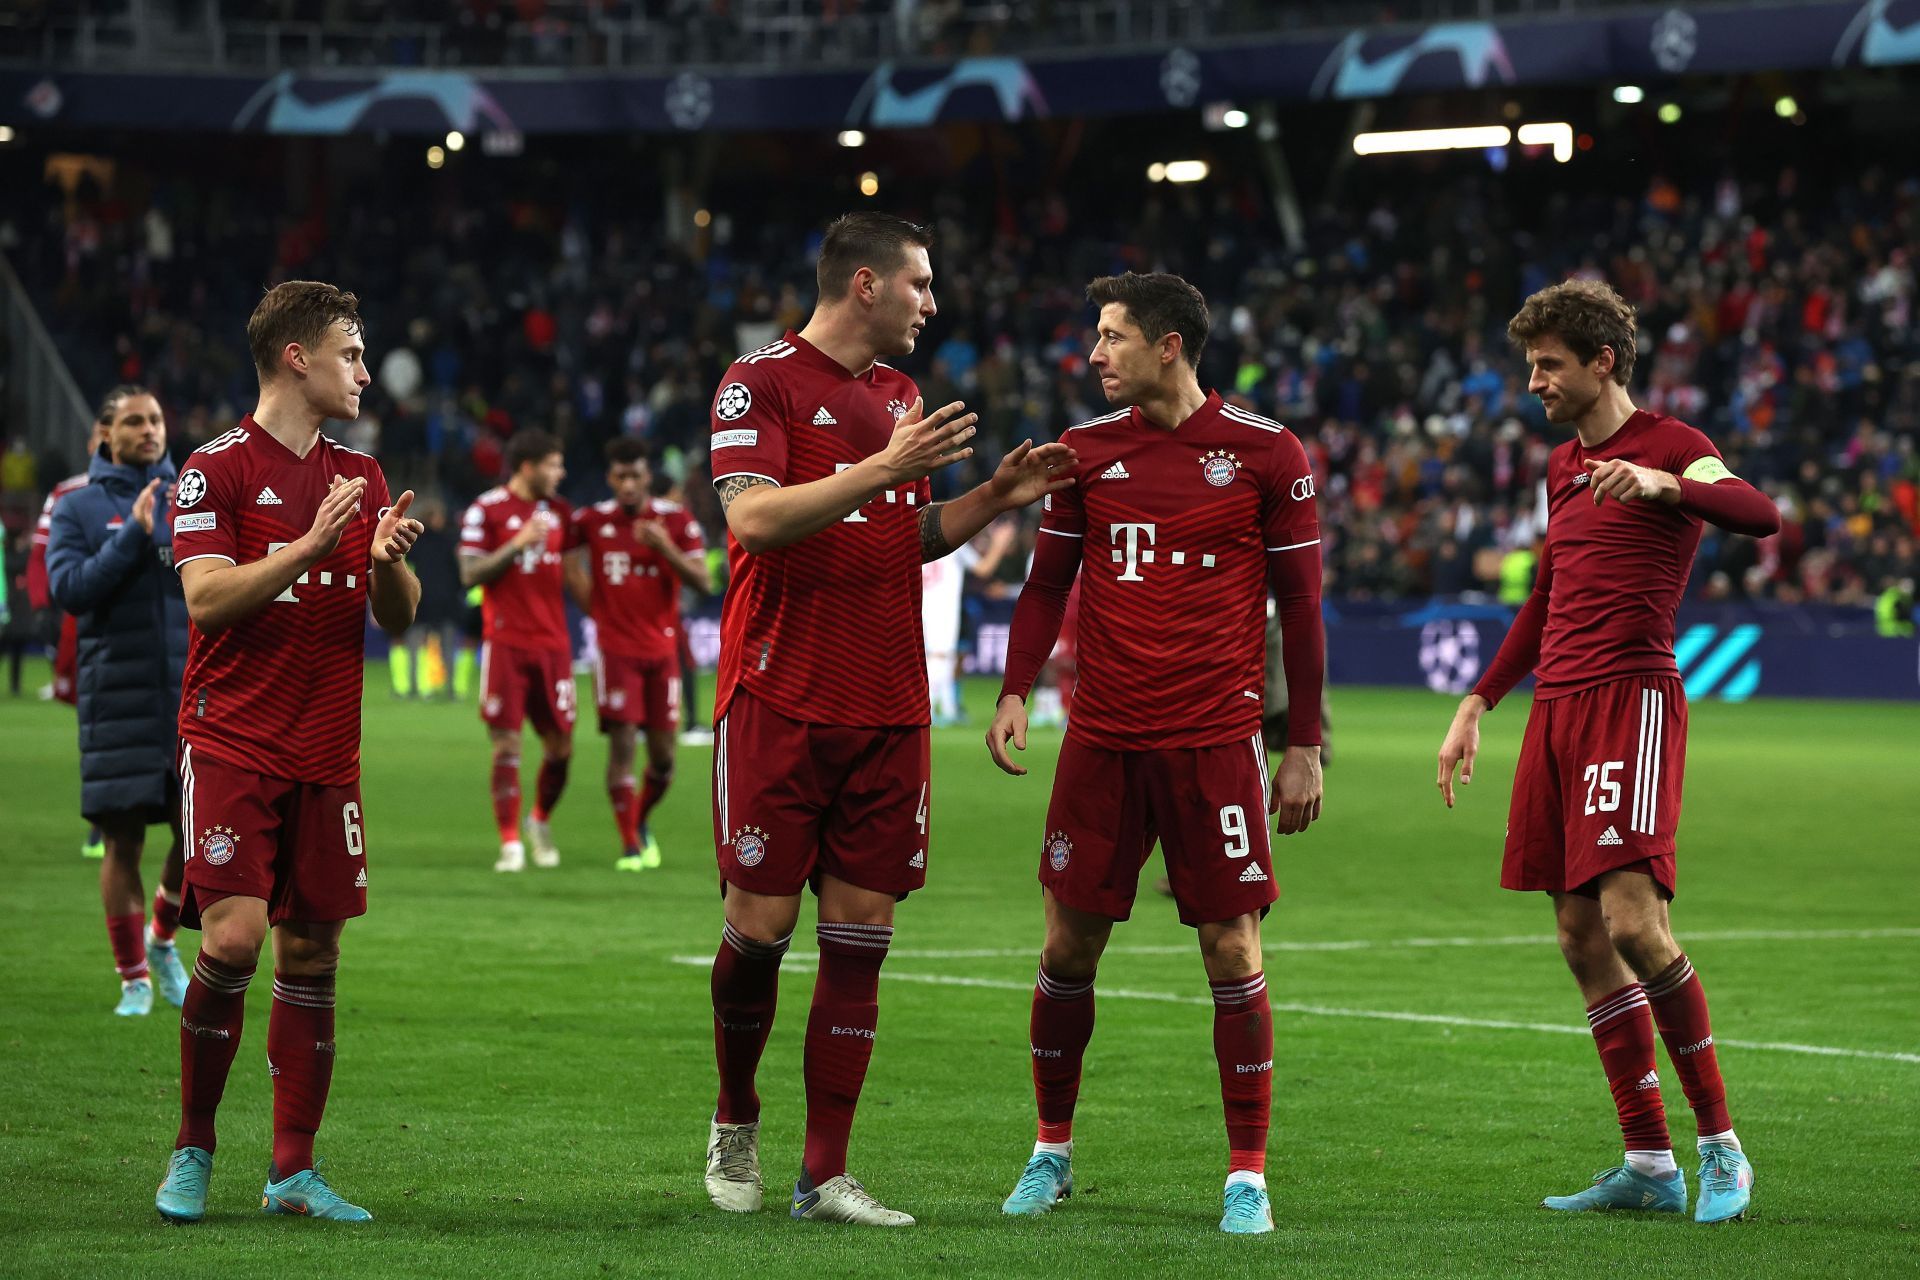 Bayern Munich and Red Bull Salzburg go head-to-head on Tuesday